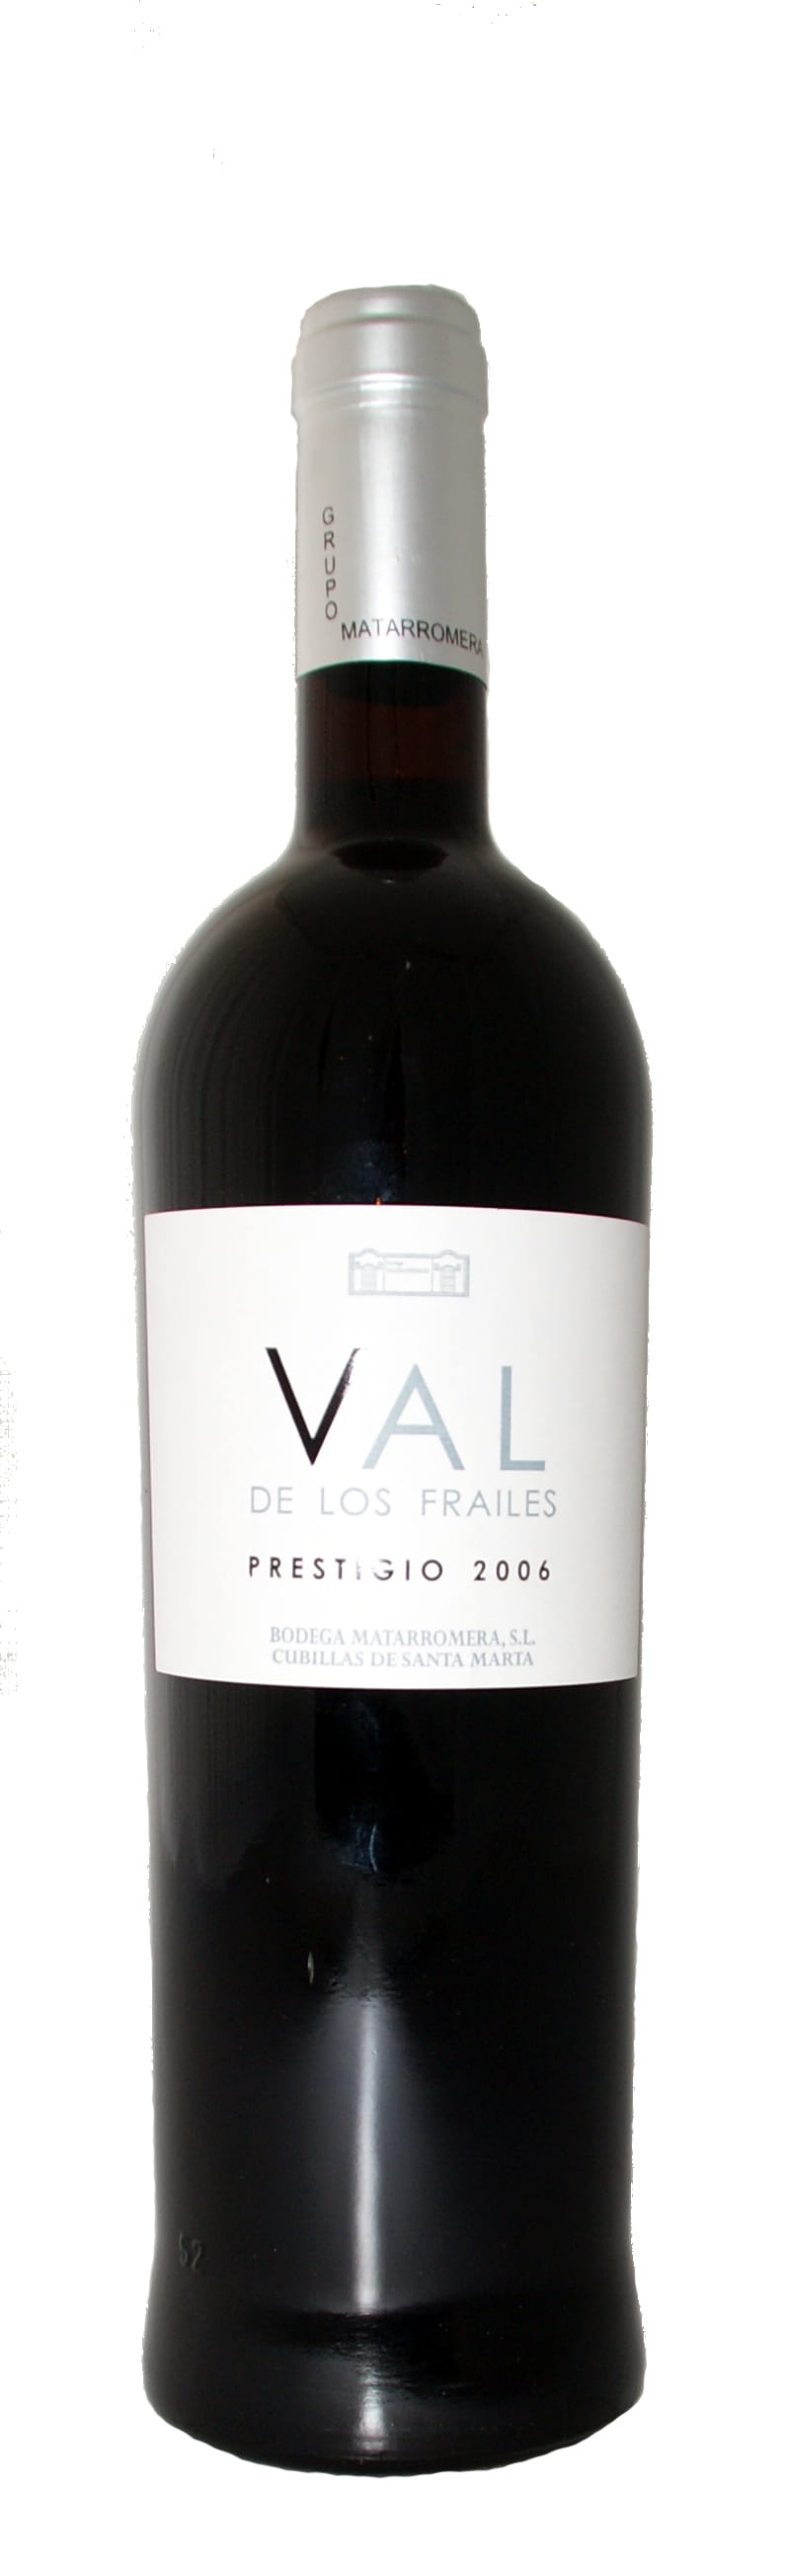 Valdelosfrailes Prestigio 2006 «embarca» en la carta de vinos Business Plus de Iberia